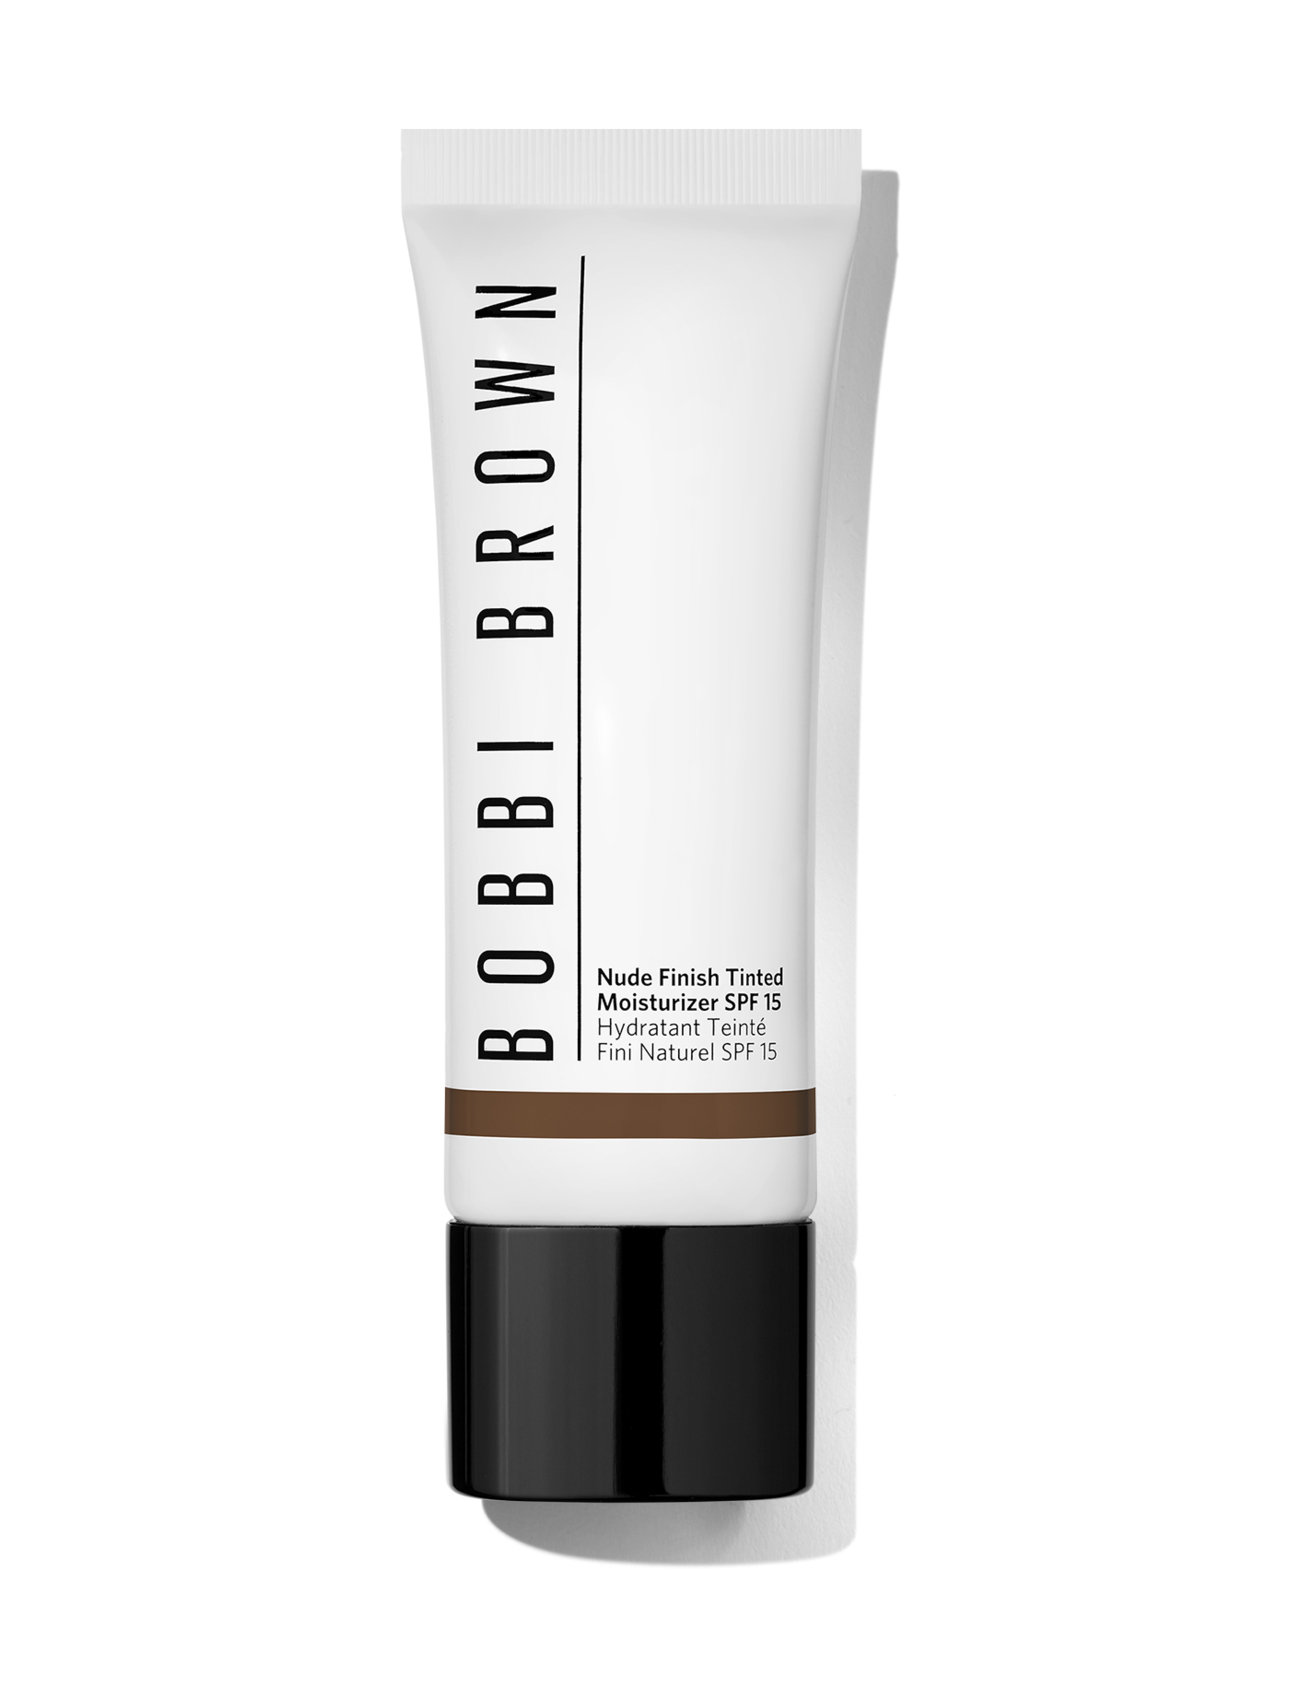 Nude Finish Tinted Moisturizer Spf15 Beauty WOMEN Skin Care Face Day Creams Ruskea Bobbi Brown